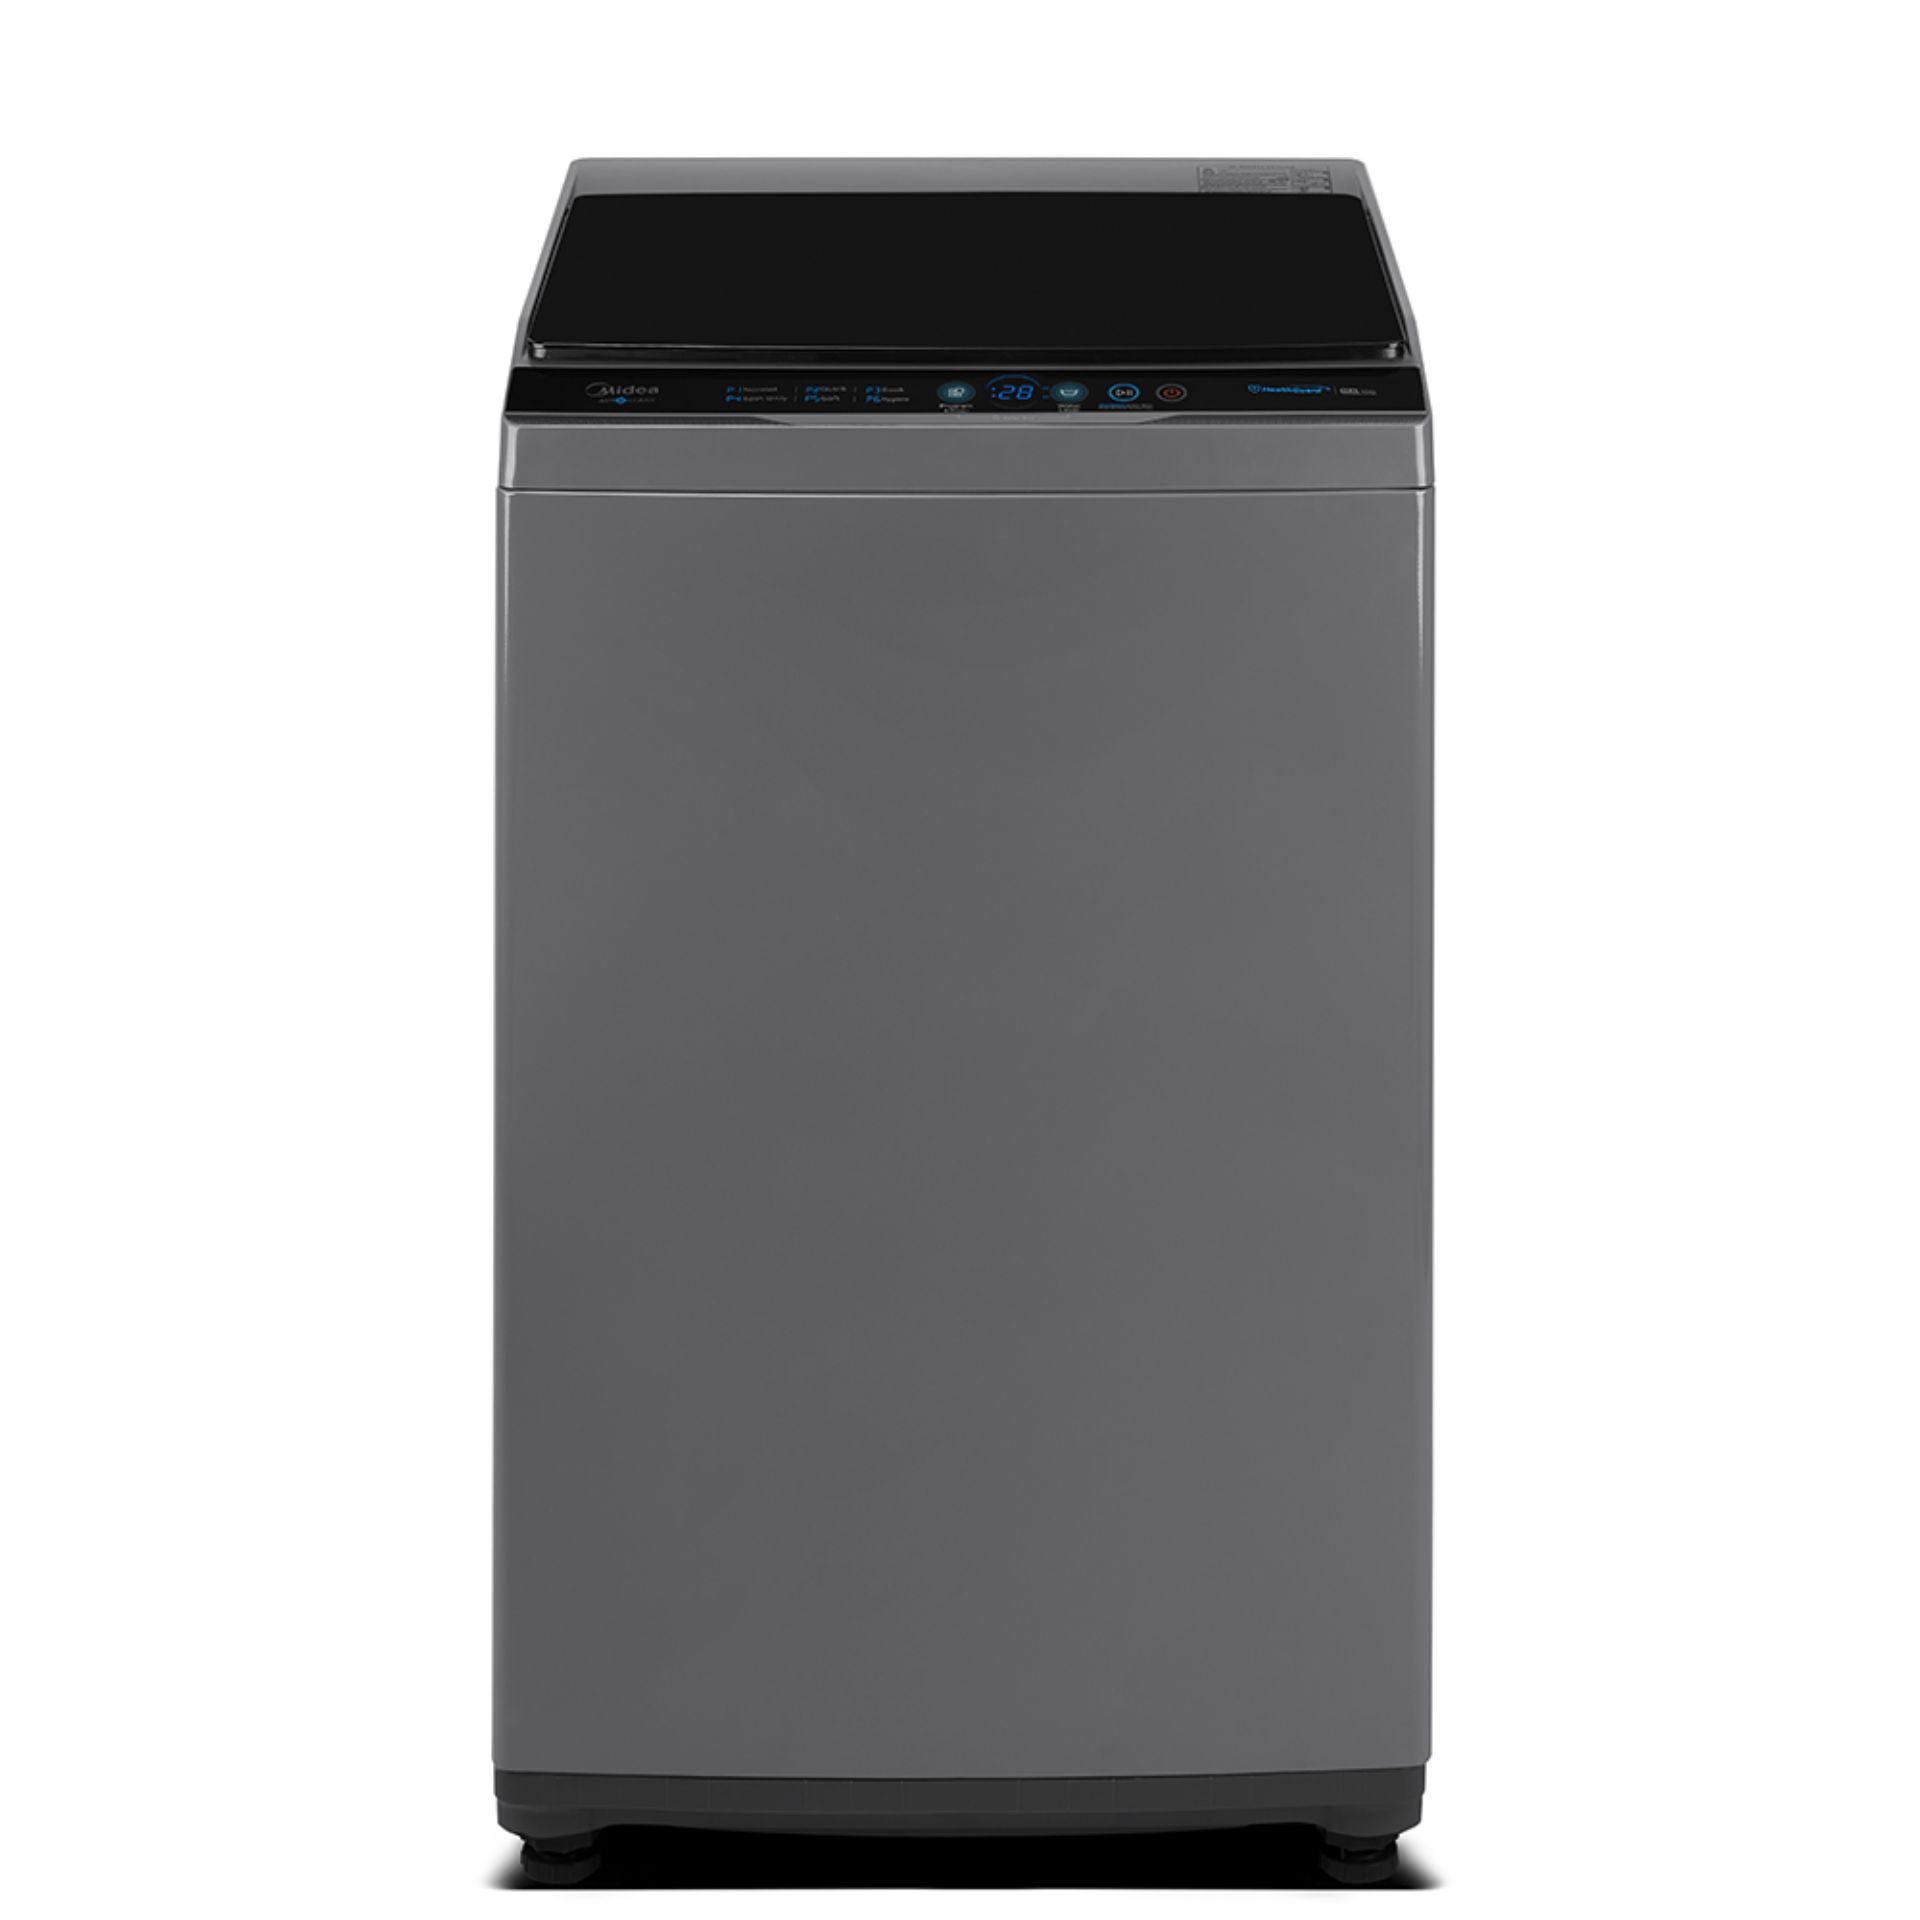  Buy MA 100 7 kg washing machine online